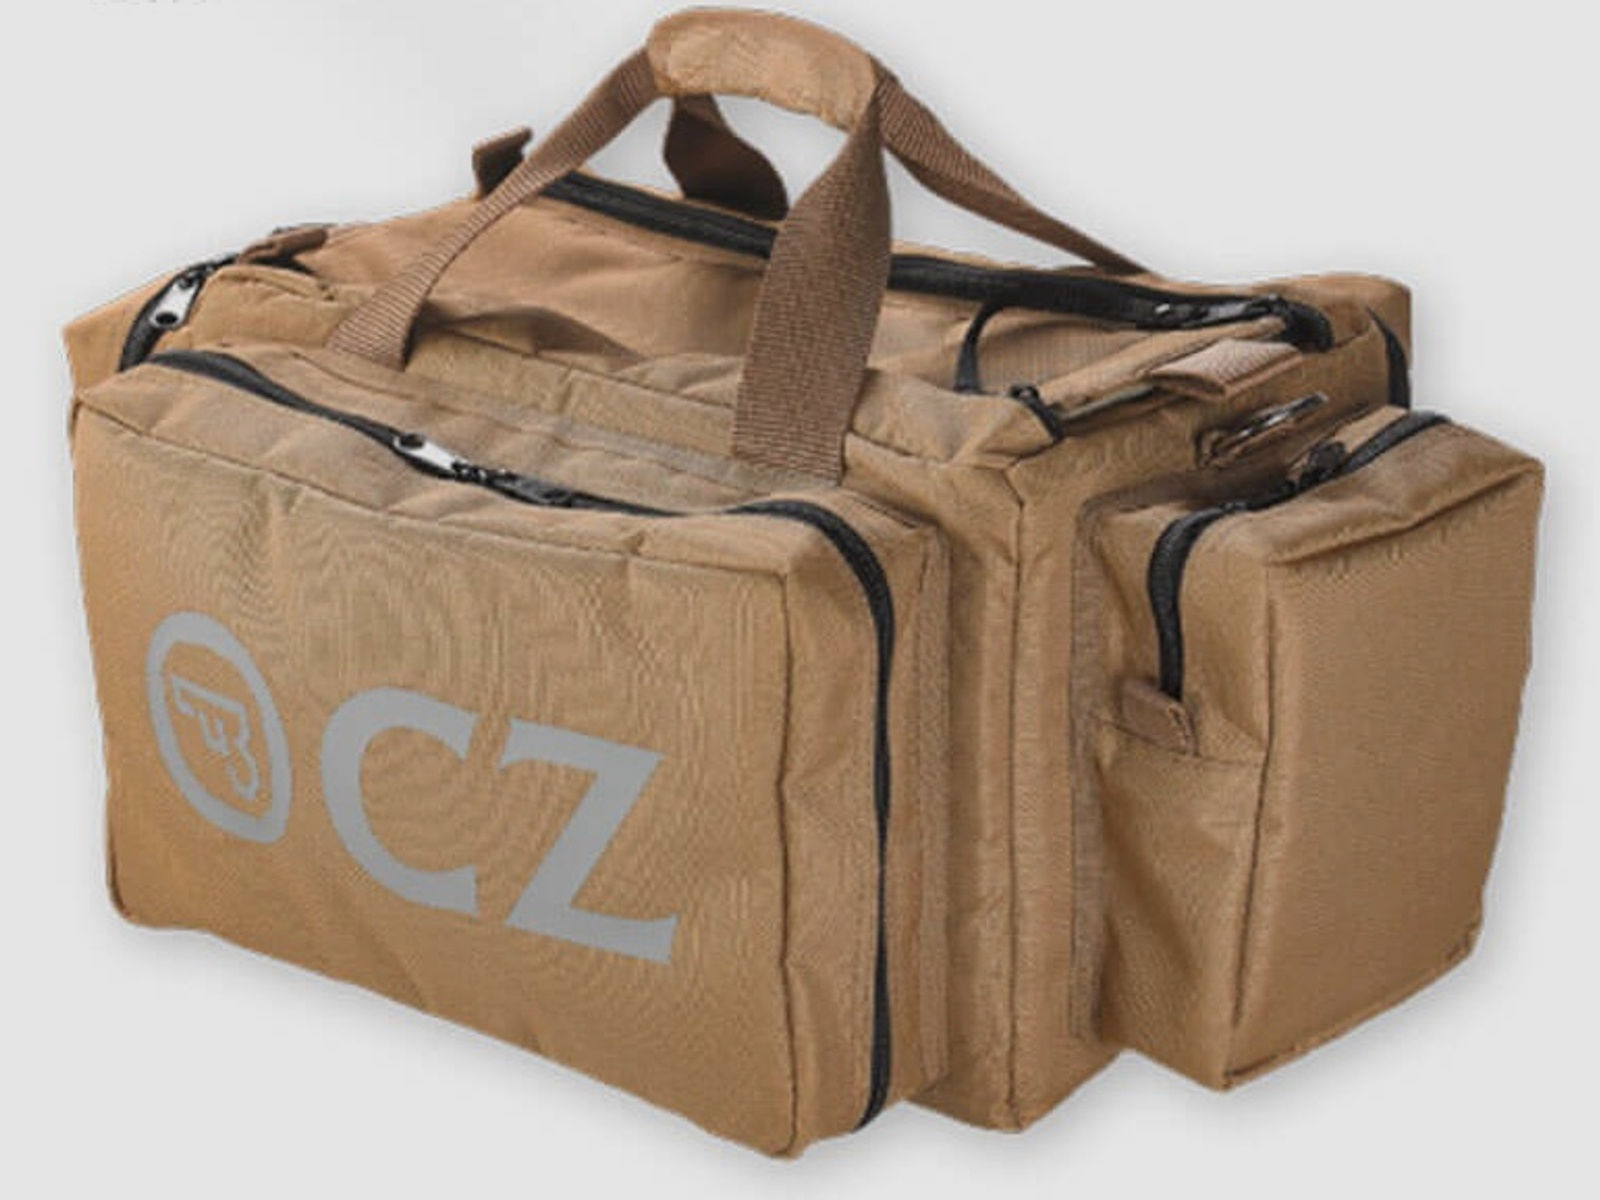 CZ Range Bag 